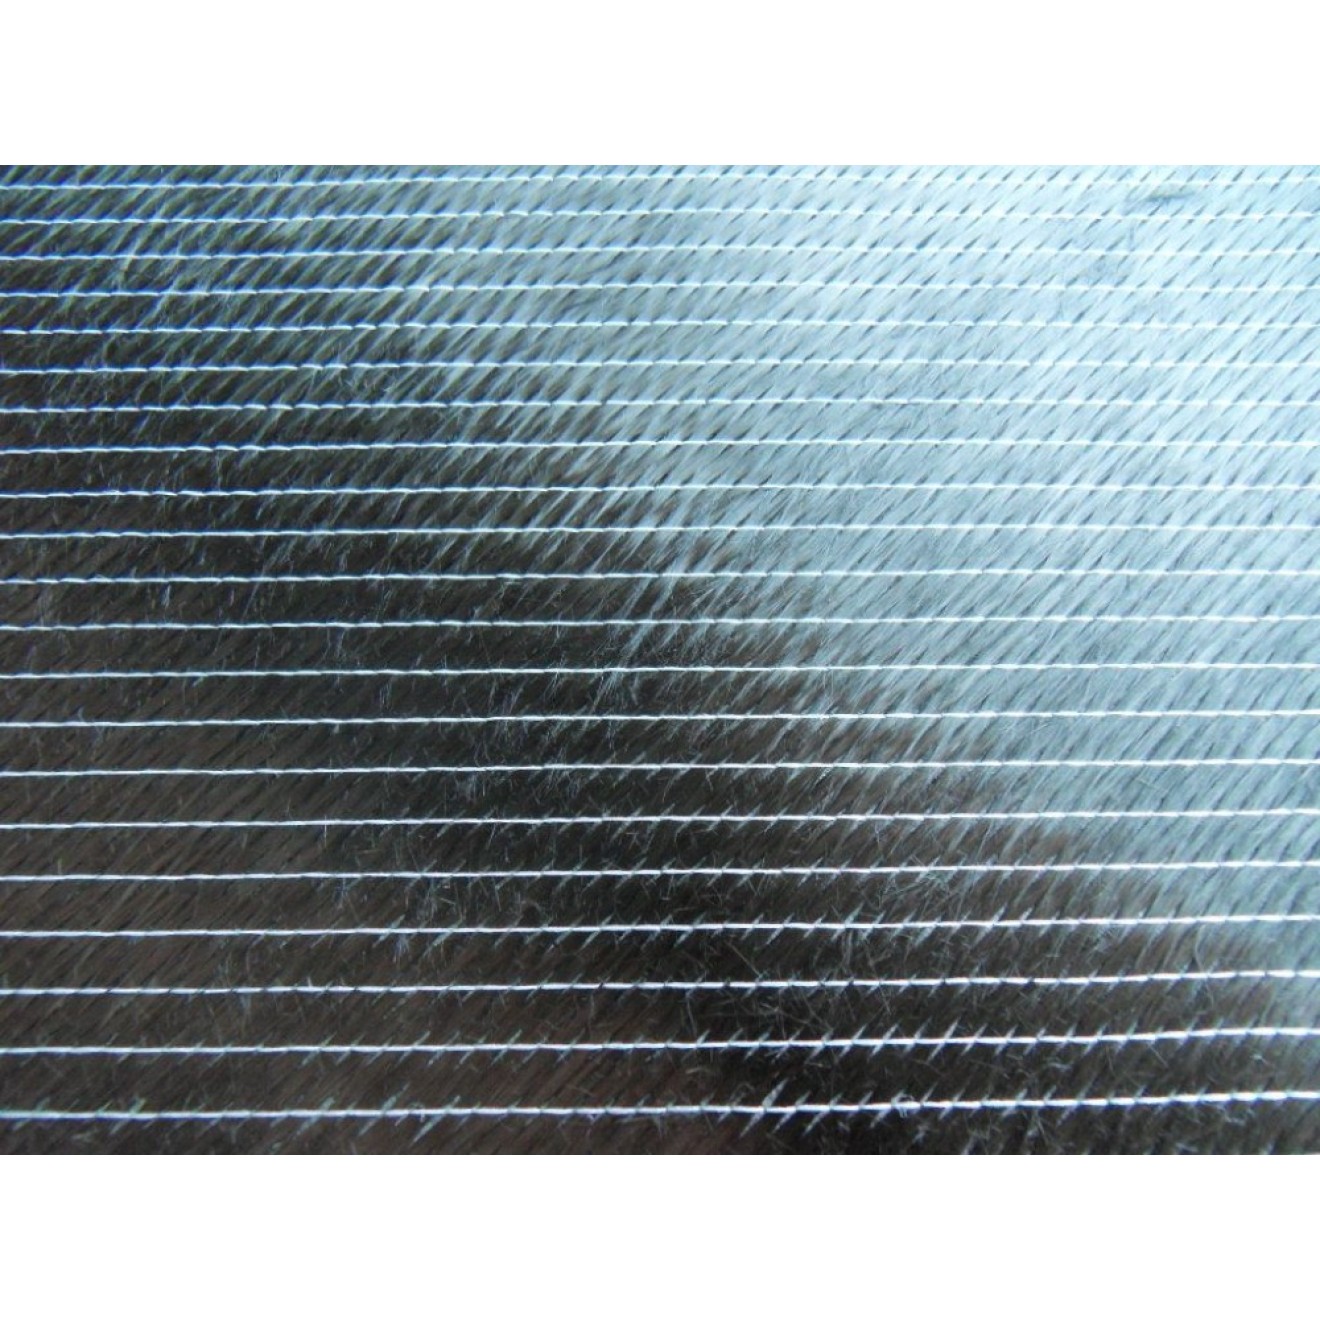 Carbon non-crimp fabric biaxial 200g/m², width 127cm